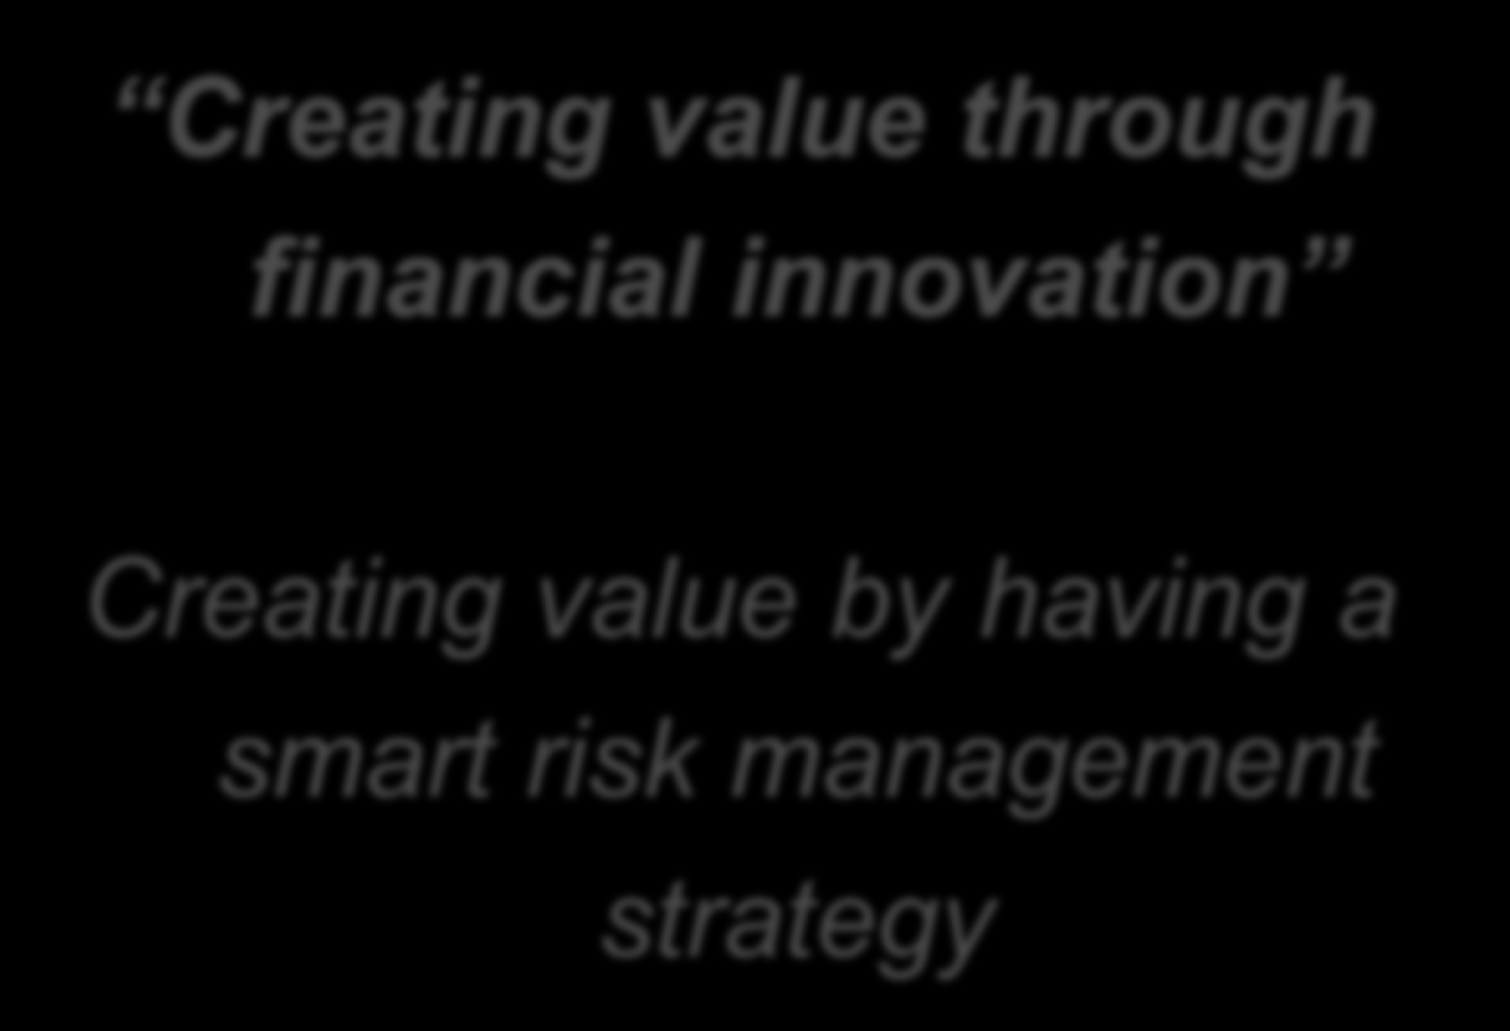 FS-Innovators BV Creating value through financial